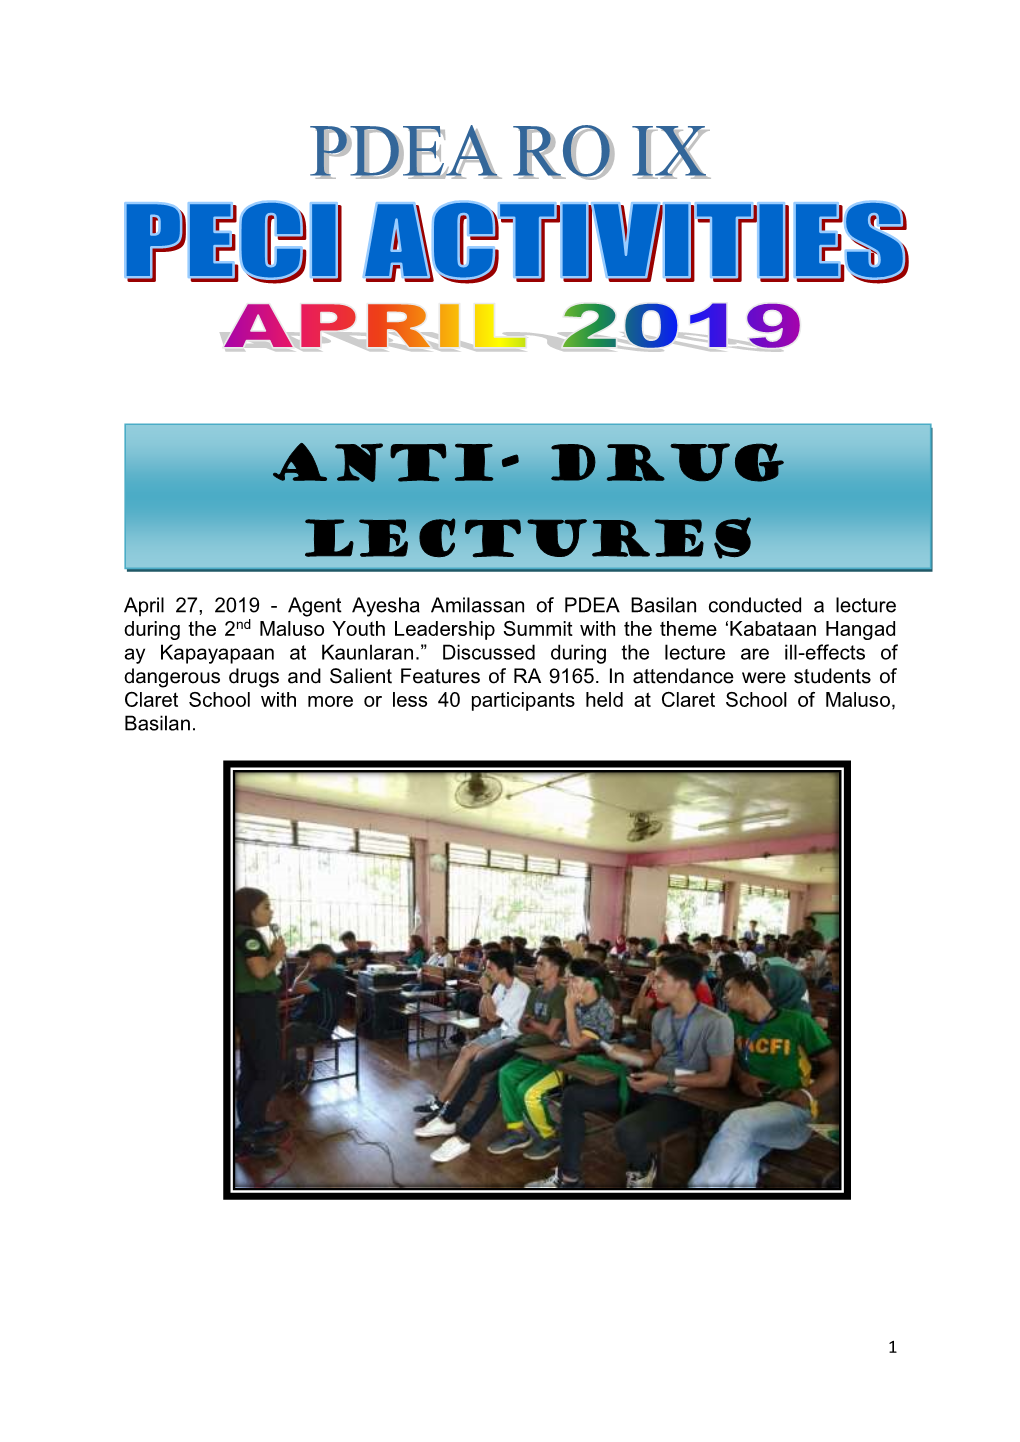 Anti- Drug Lectures